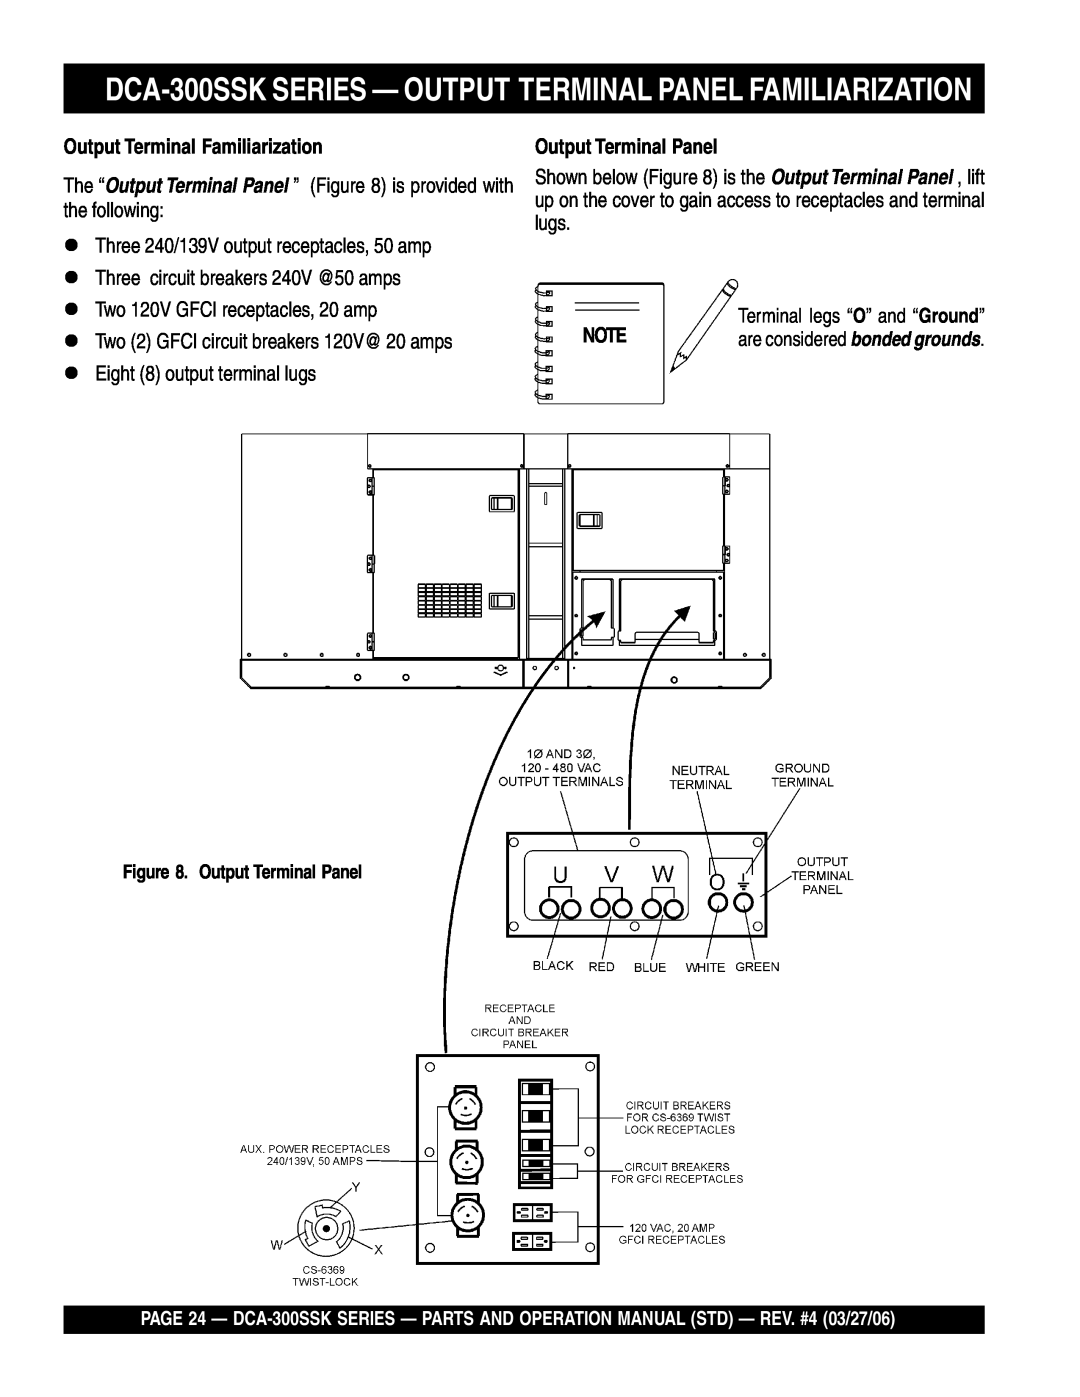 Multiquip manual DCA-300SSK SERIES - OUTPUT TERMINAL PANEL FAMILIARIZATION, Output Terminal Familiarization 